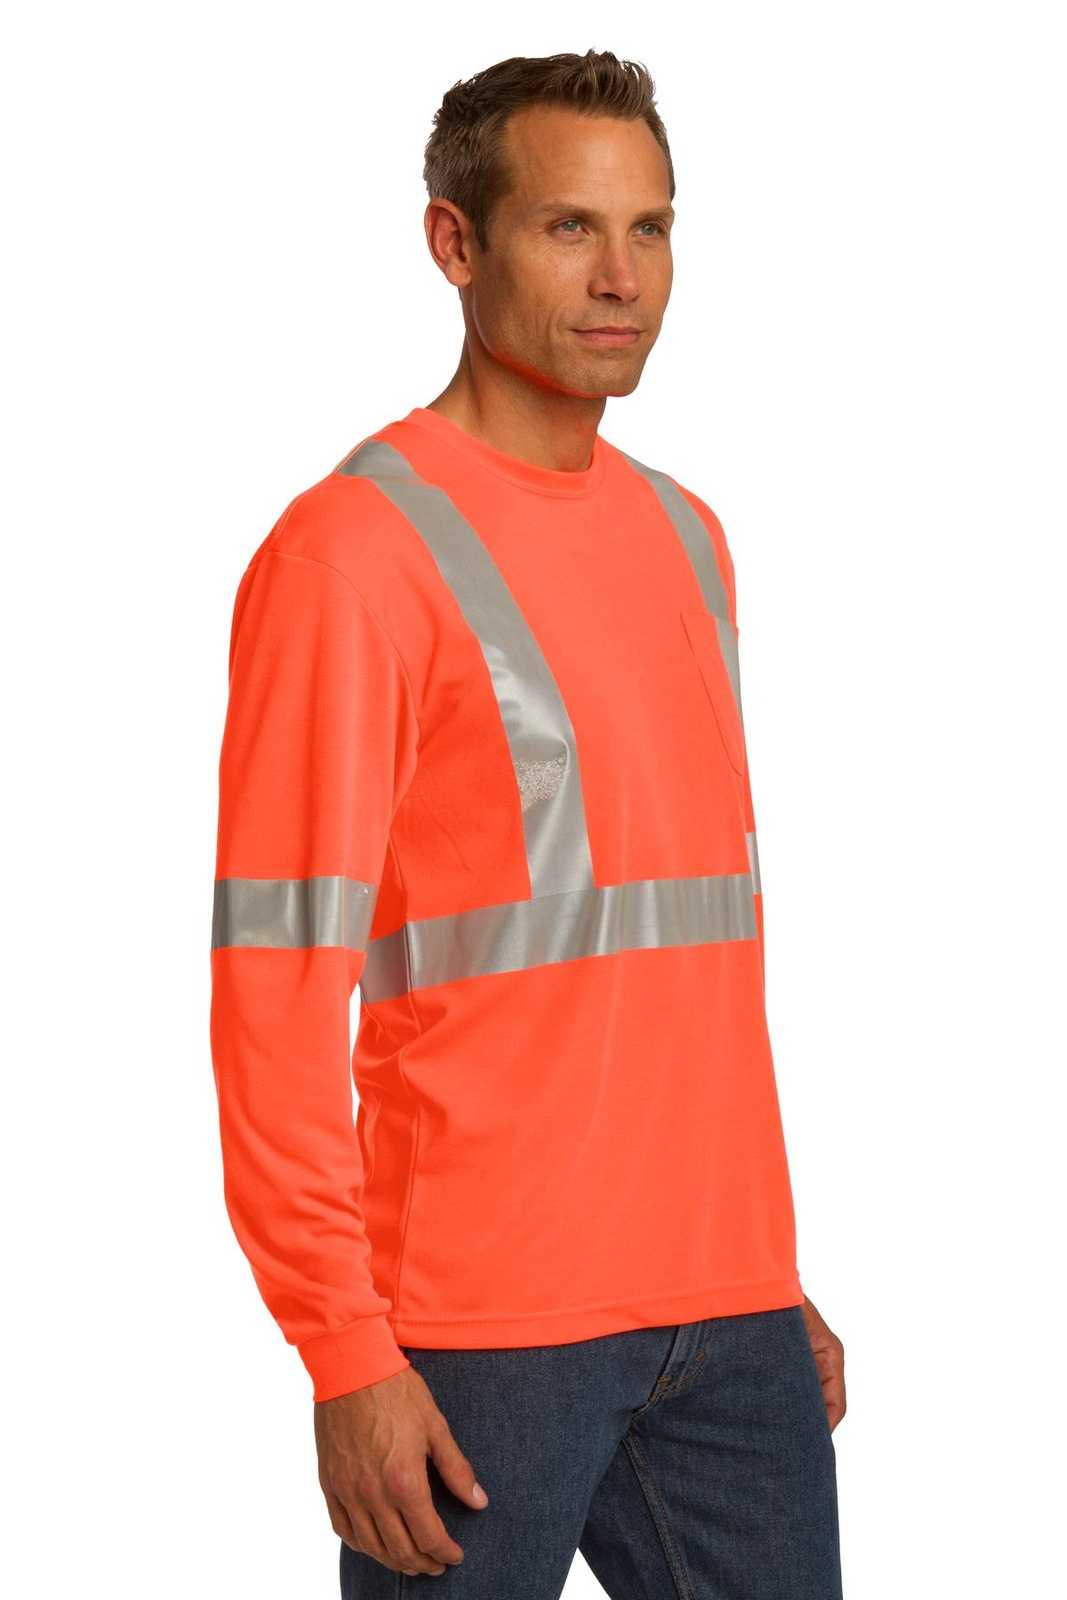 CornerStone CS401LS ANSI 107 Class 2 Long Sleeve Safety T-Shirt - Safety Orange Reflective - HIT a Double - 4